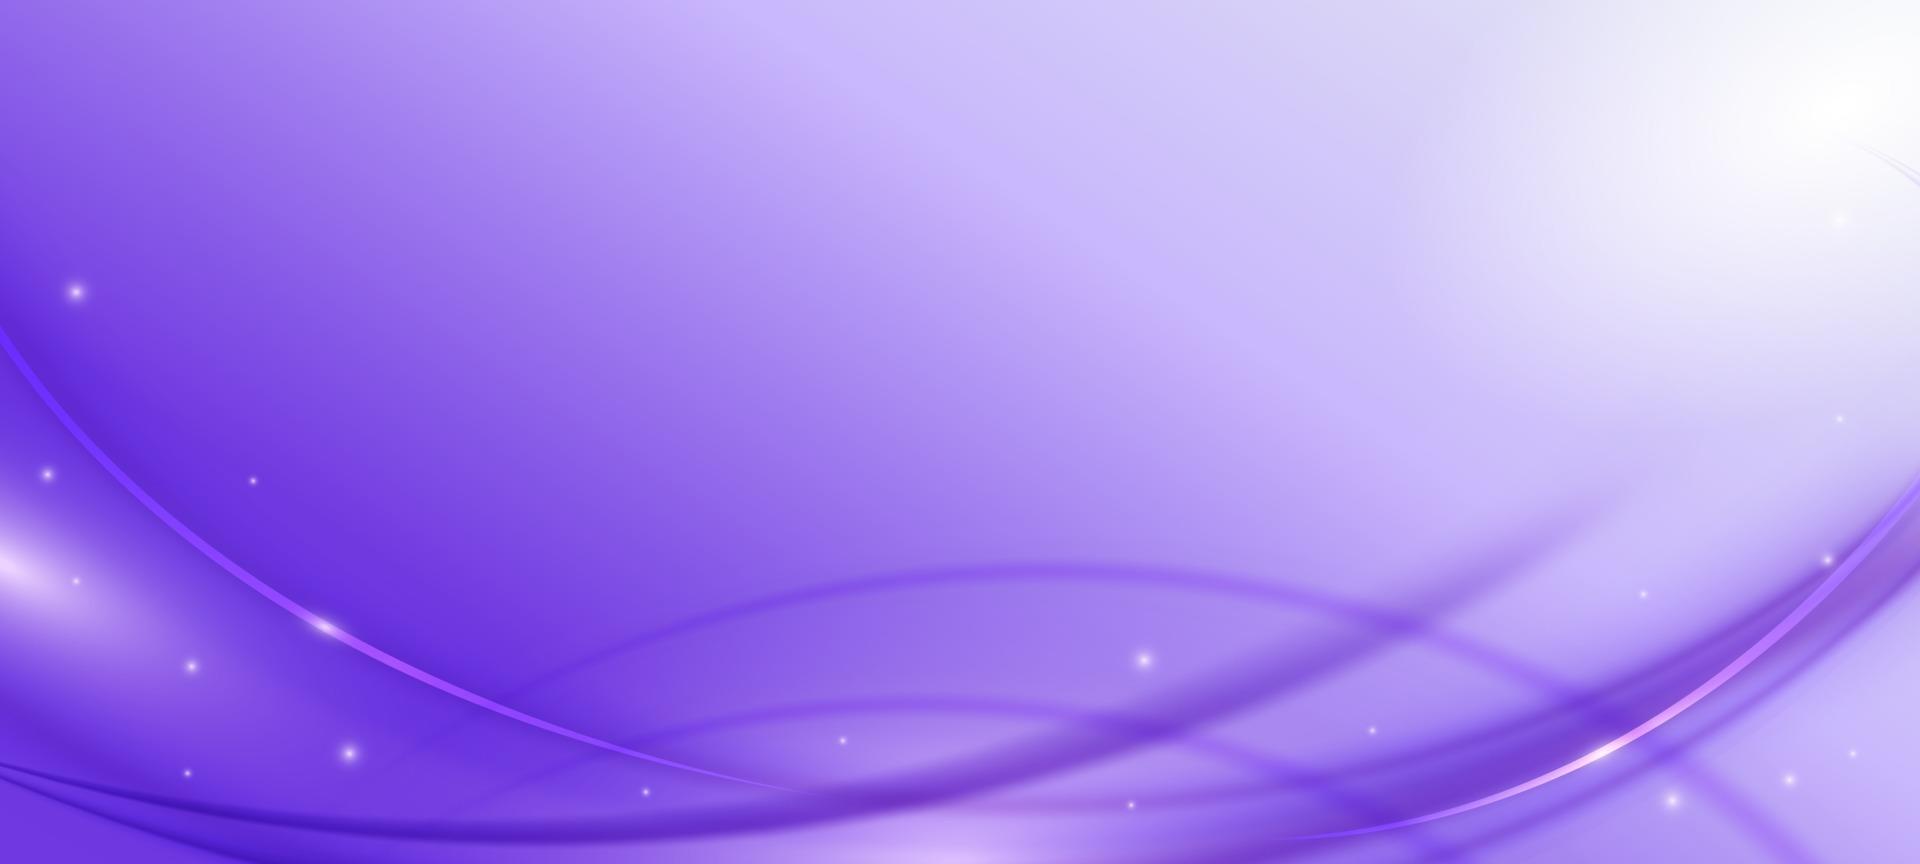 Purple Lavender Color Background vector